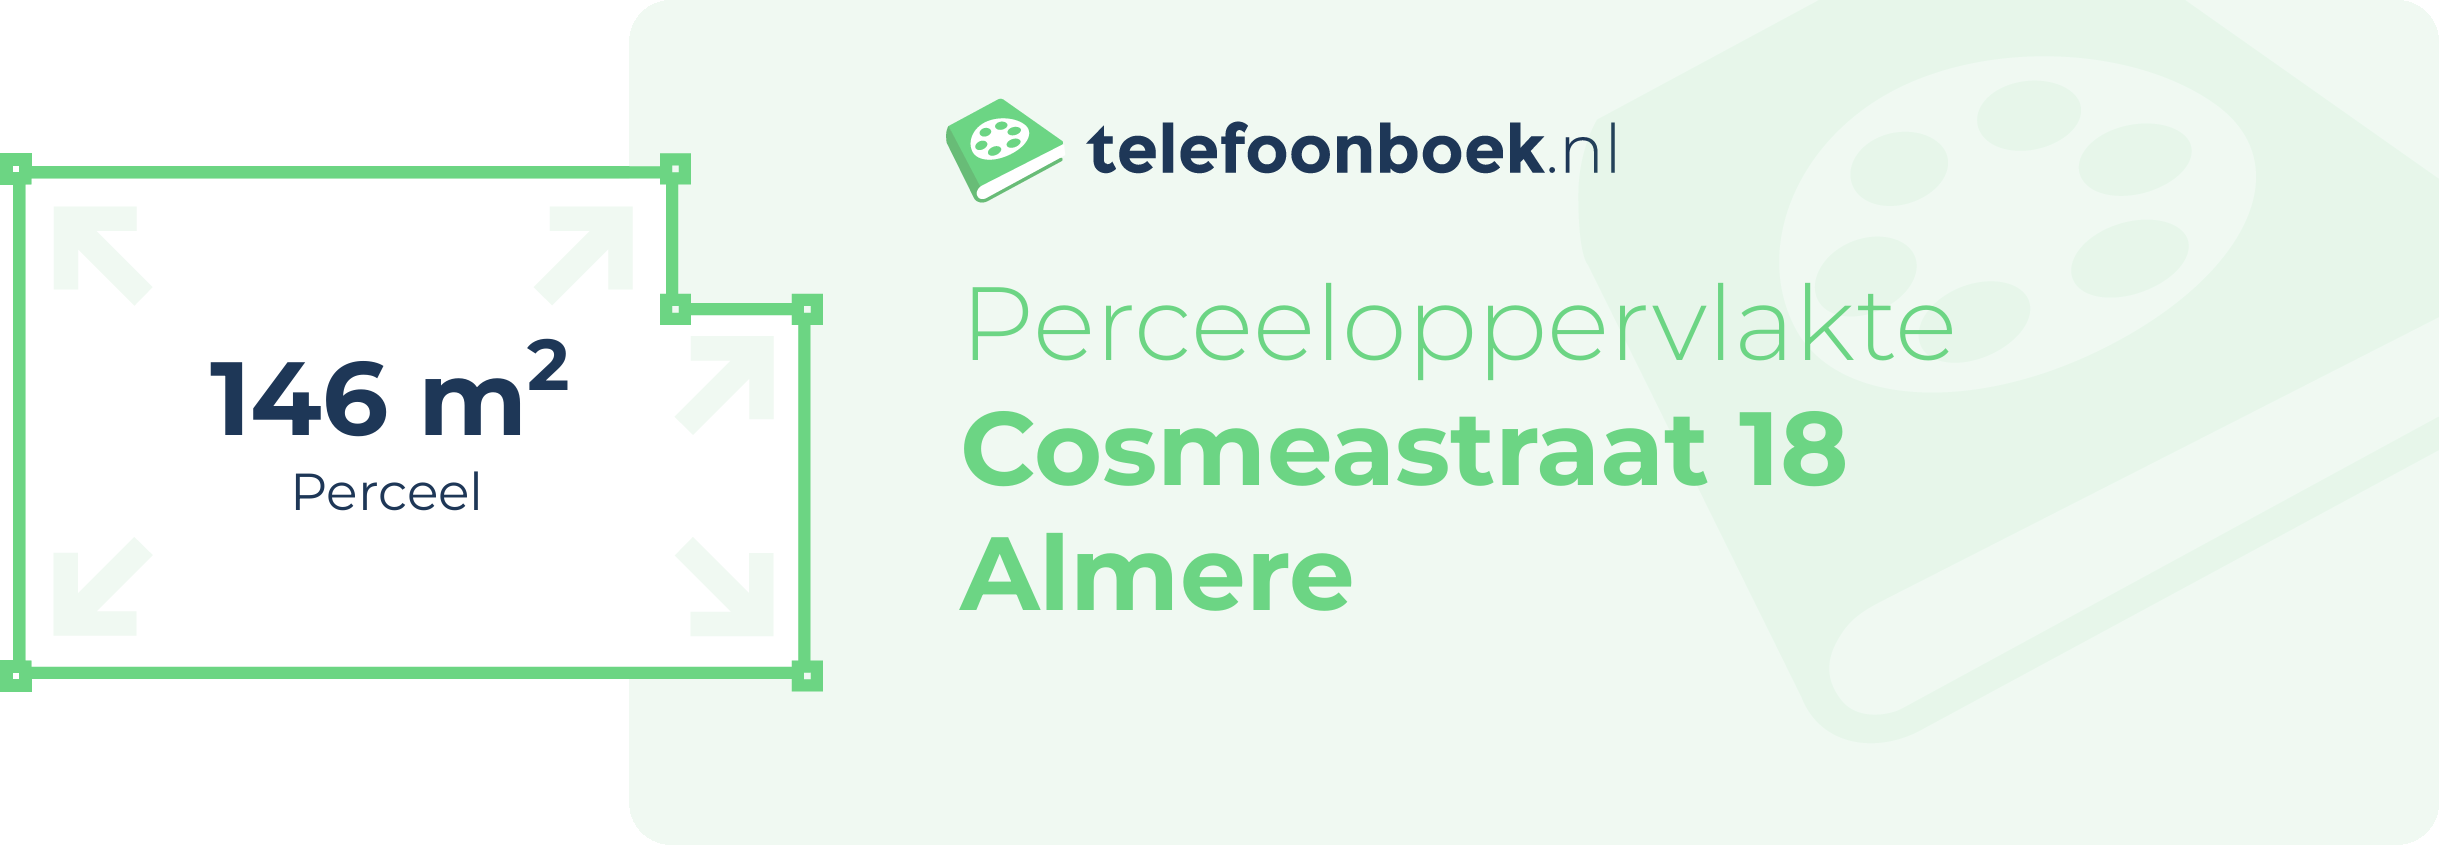 Perceeloppervlakte Cosmeastraat 18 Almere